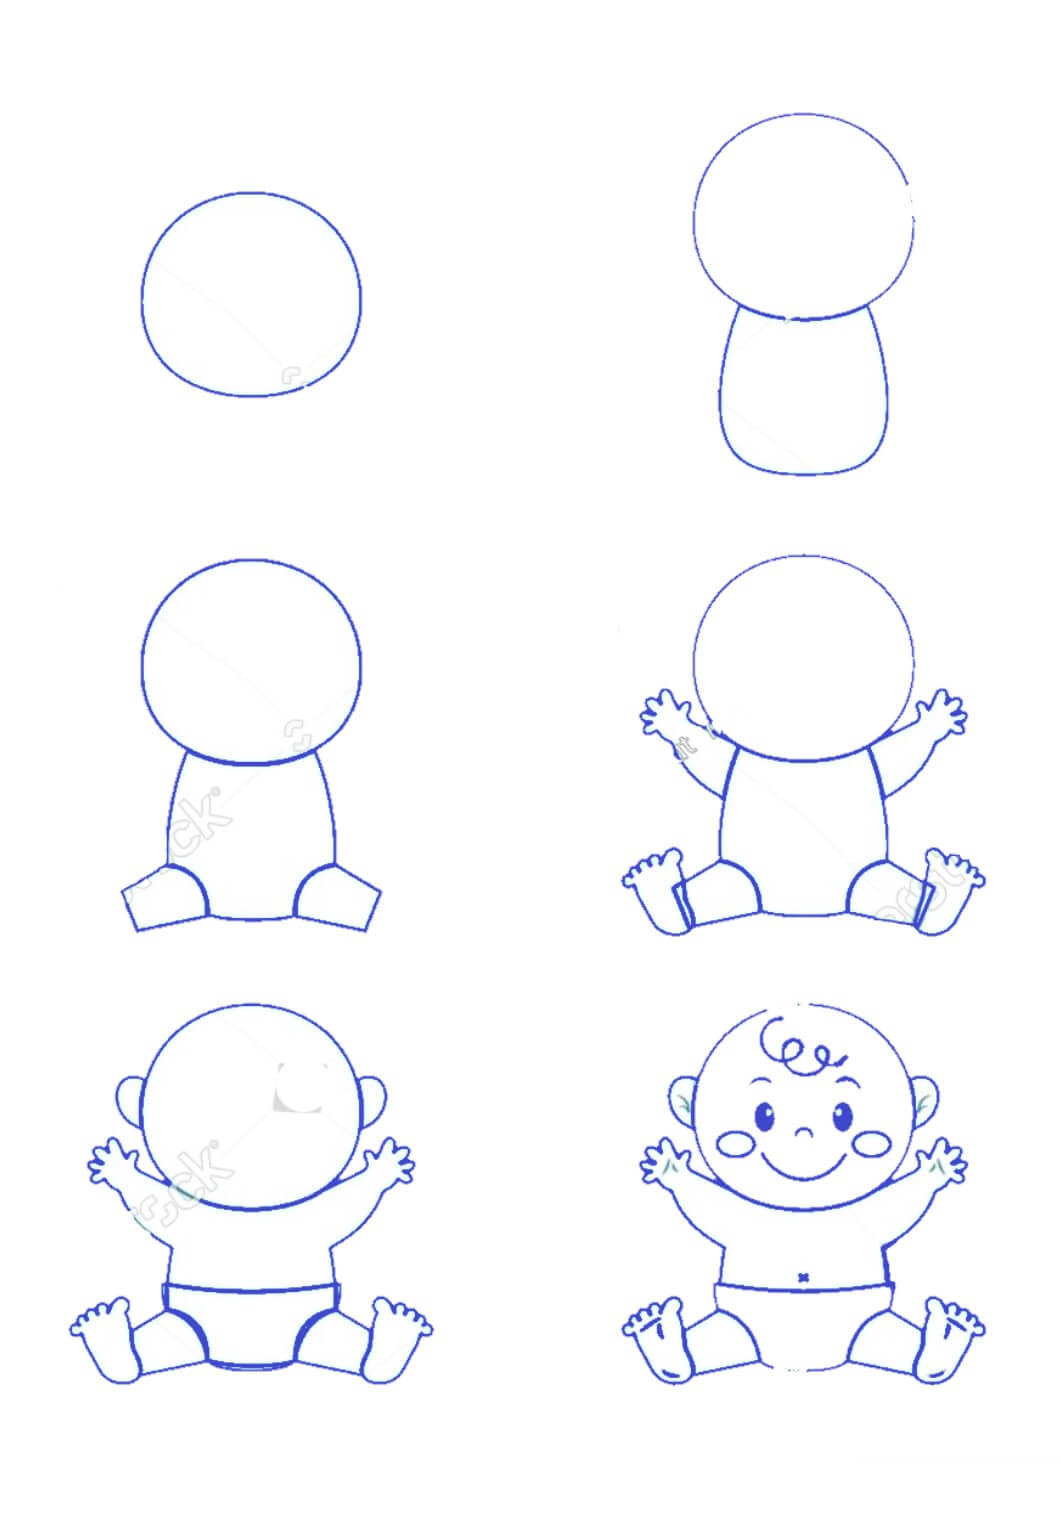 Bebek fikri (2) çizimi